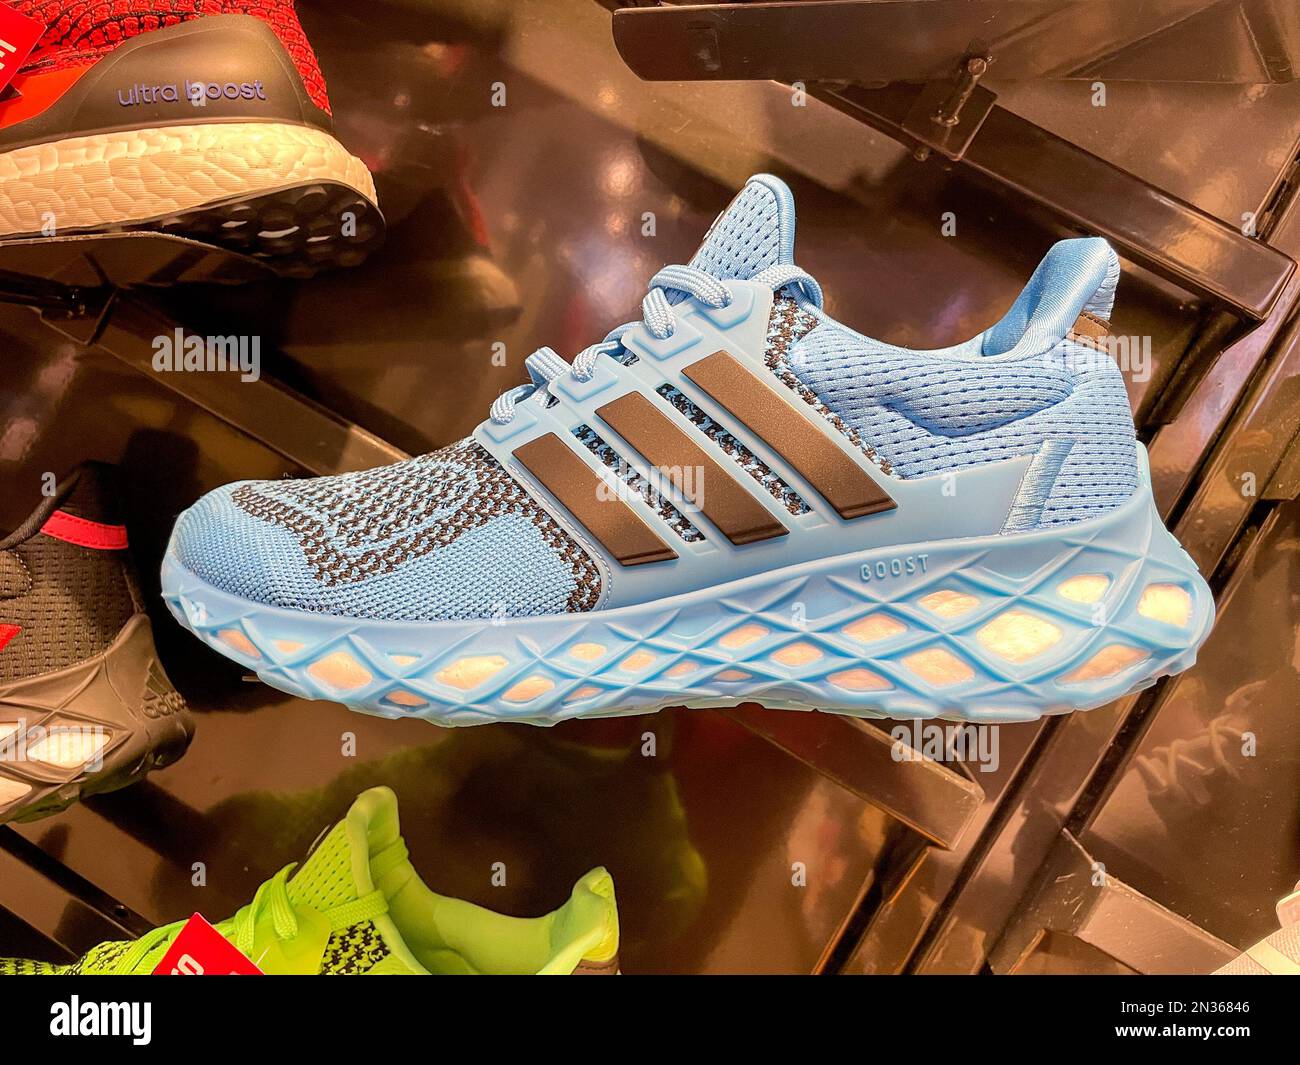 Adidas Sneaker auf Touren bringen. Stockfoto